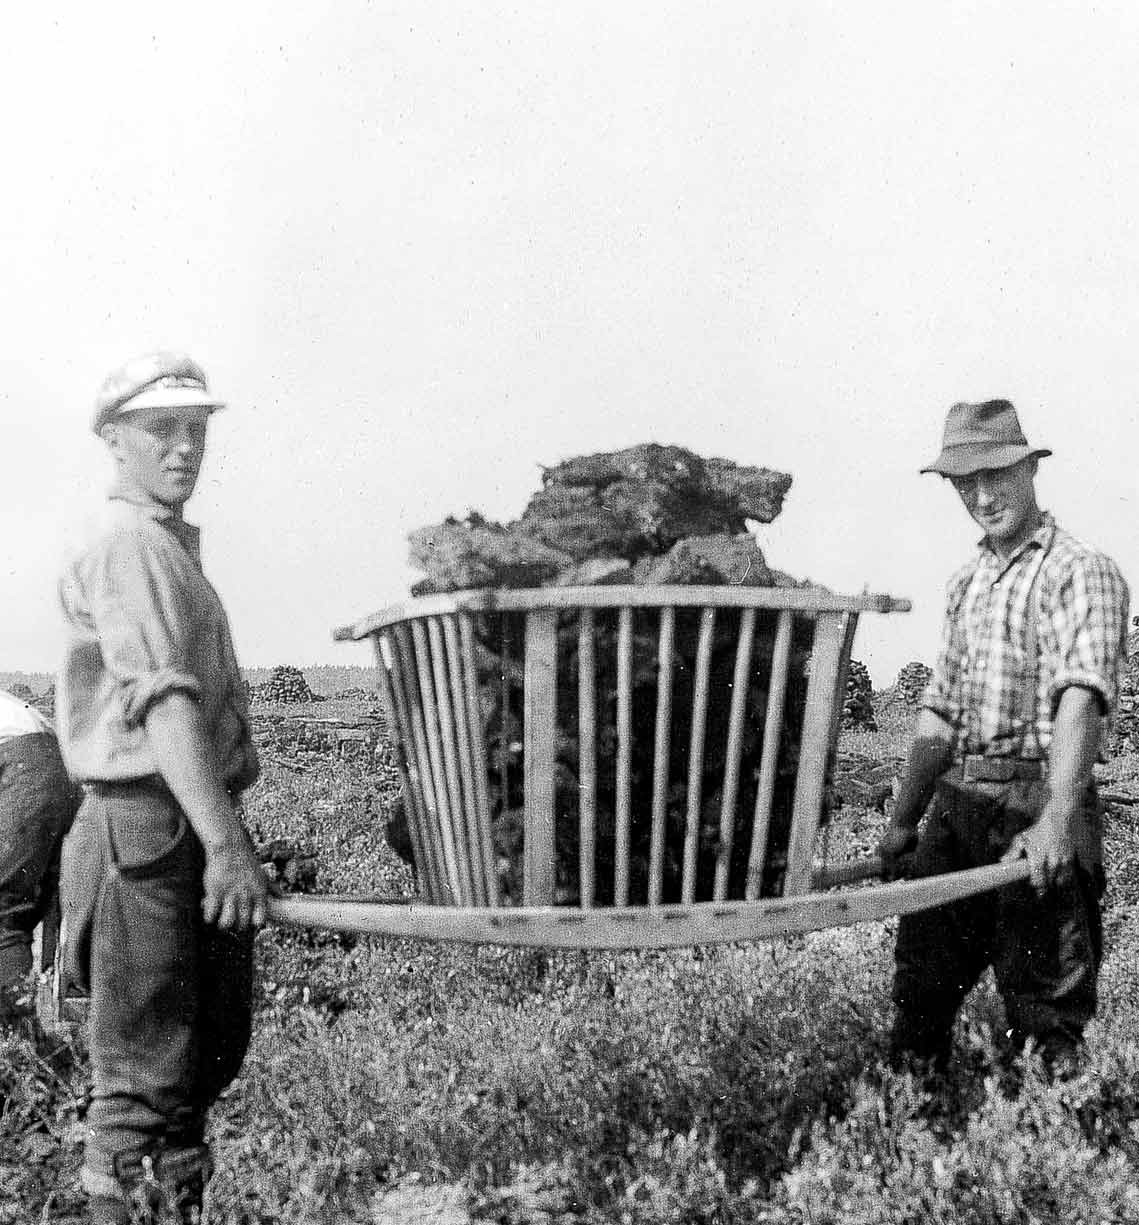 Peat harvesting in 1933